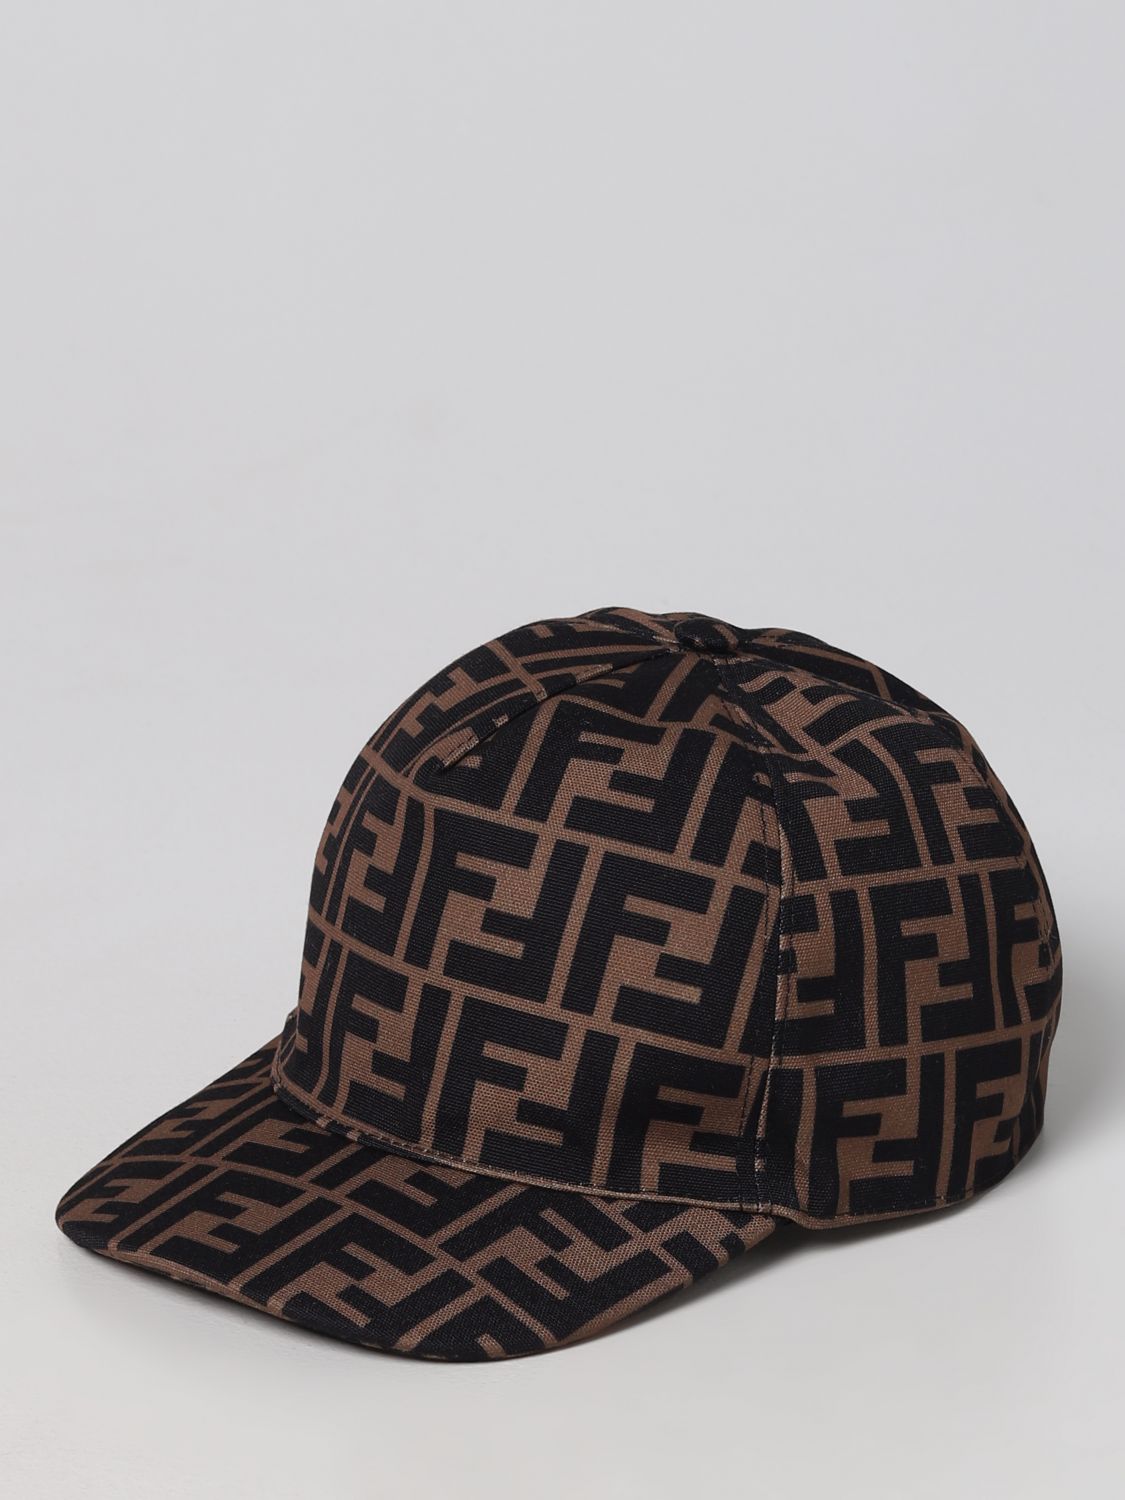 FENDI KIDS: hat for kids - Orange | Fendi Kids hat JUP004AAPV online on ...